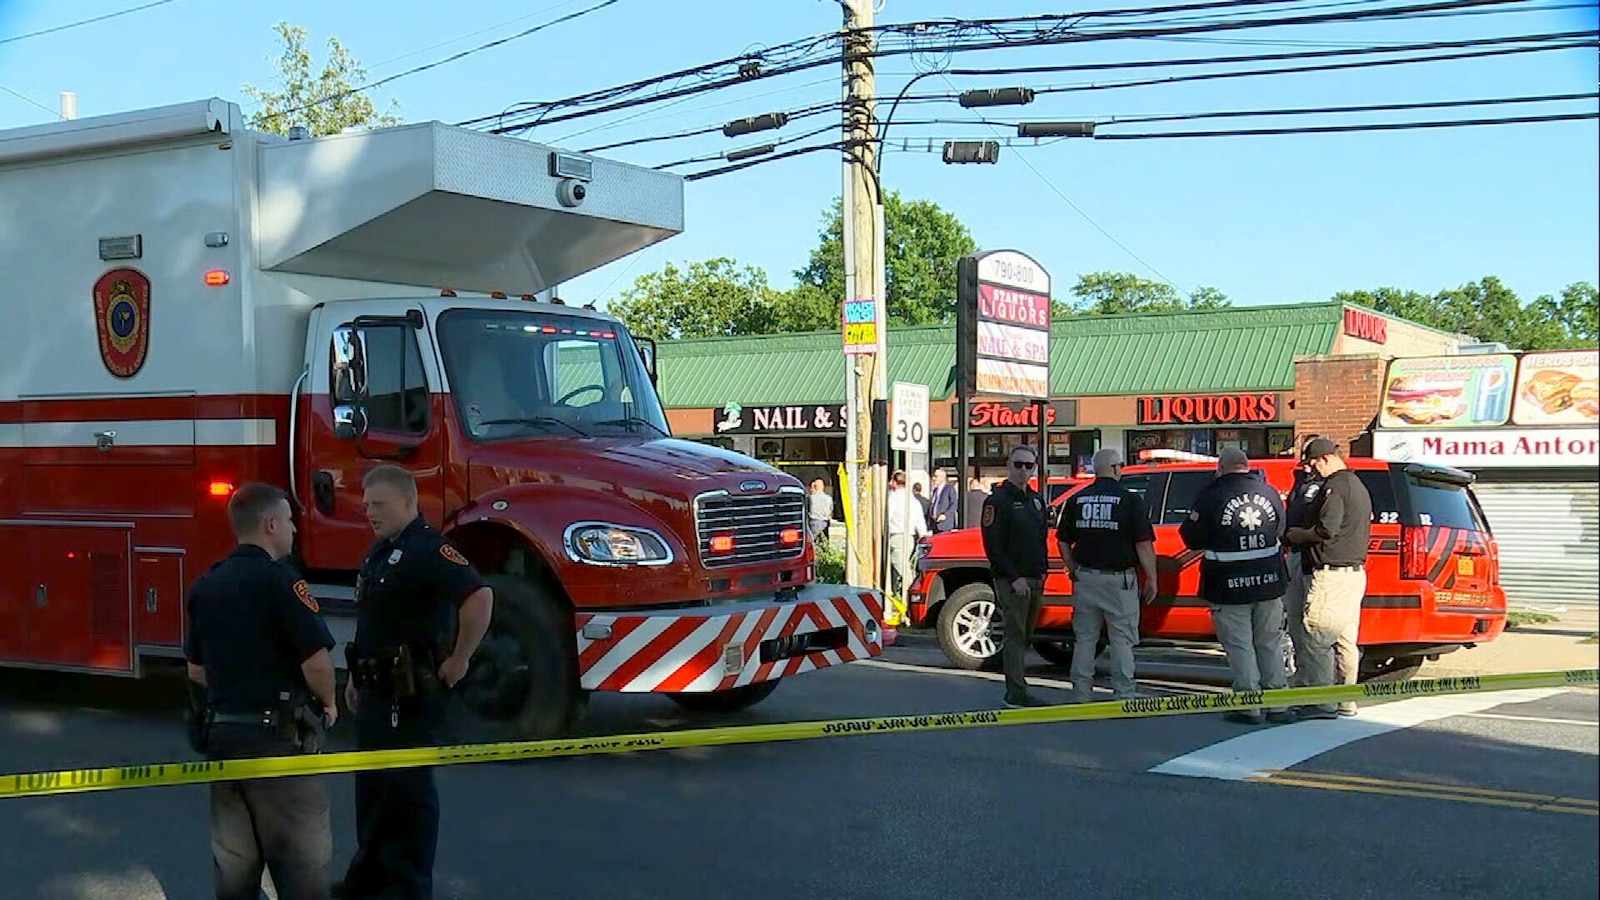 4 dead after minivan crashes into nail salon on Long Island, New York: Authorities